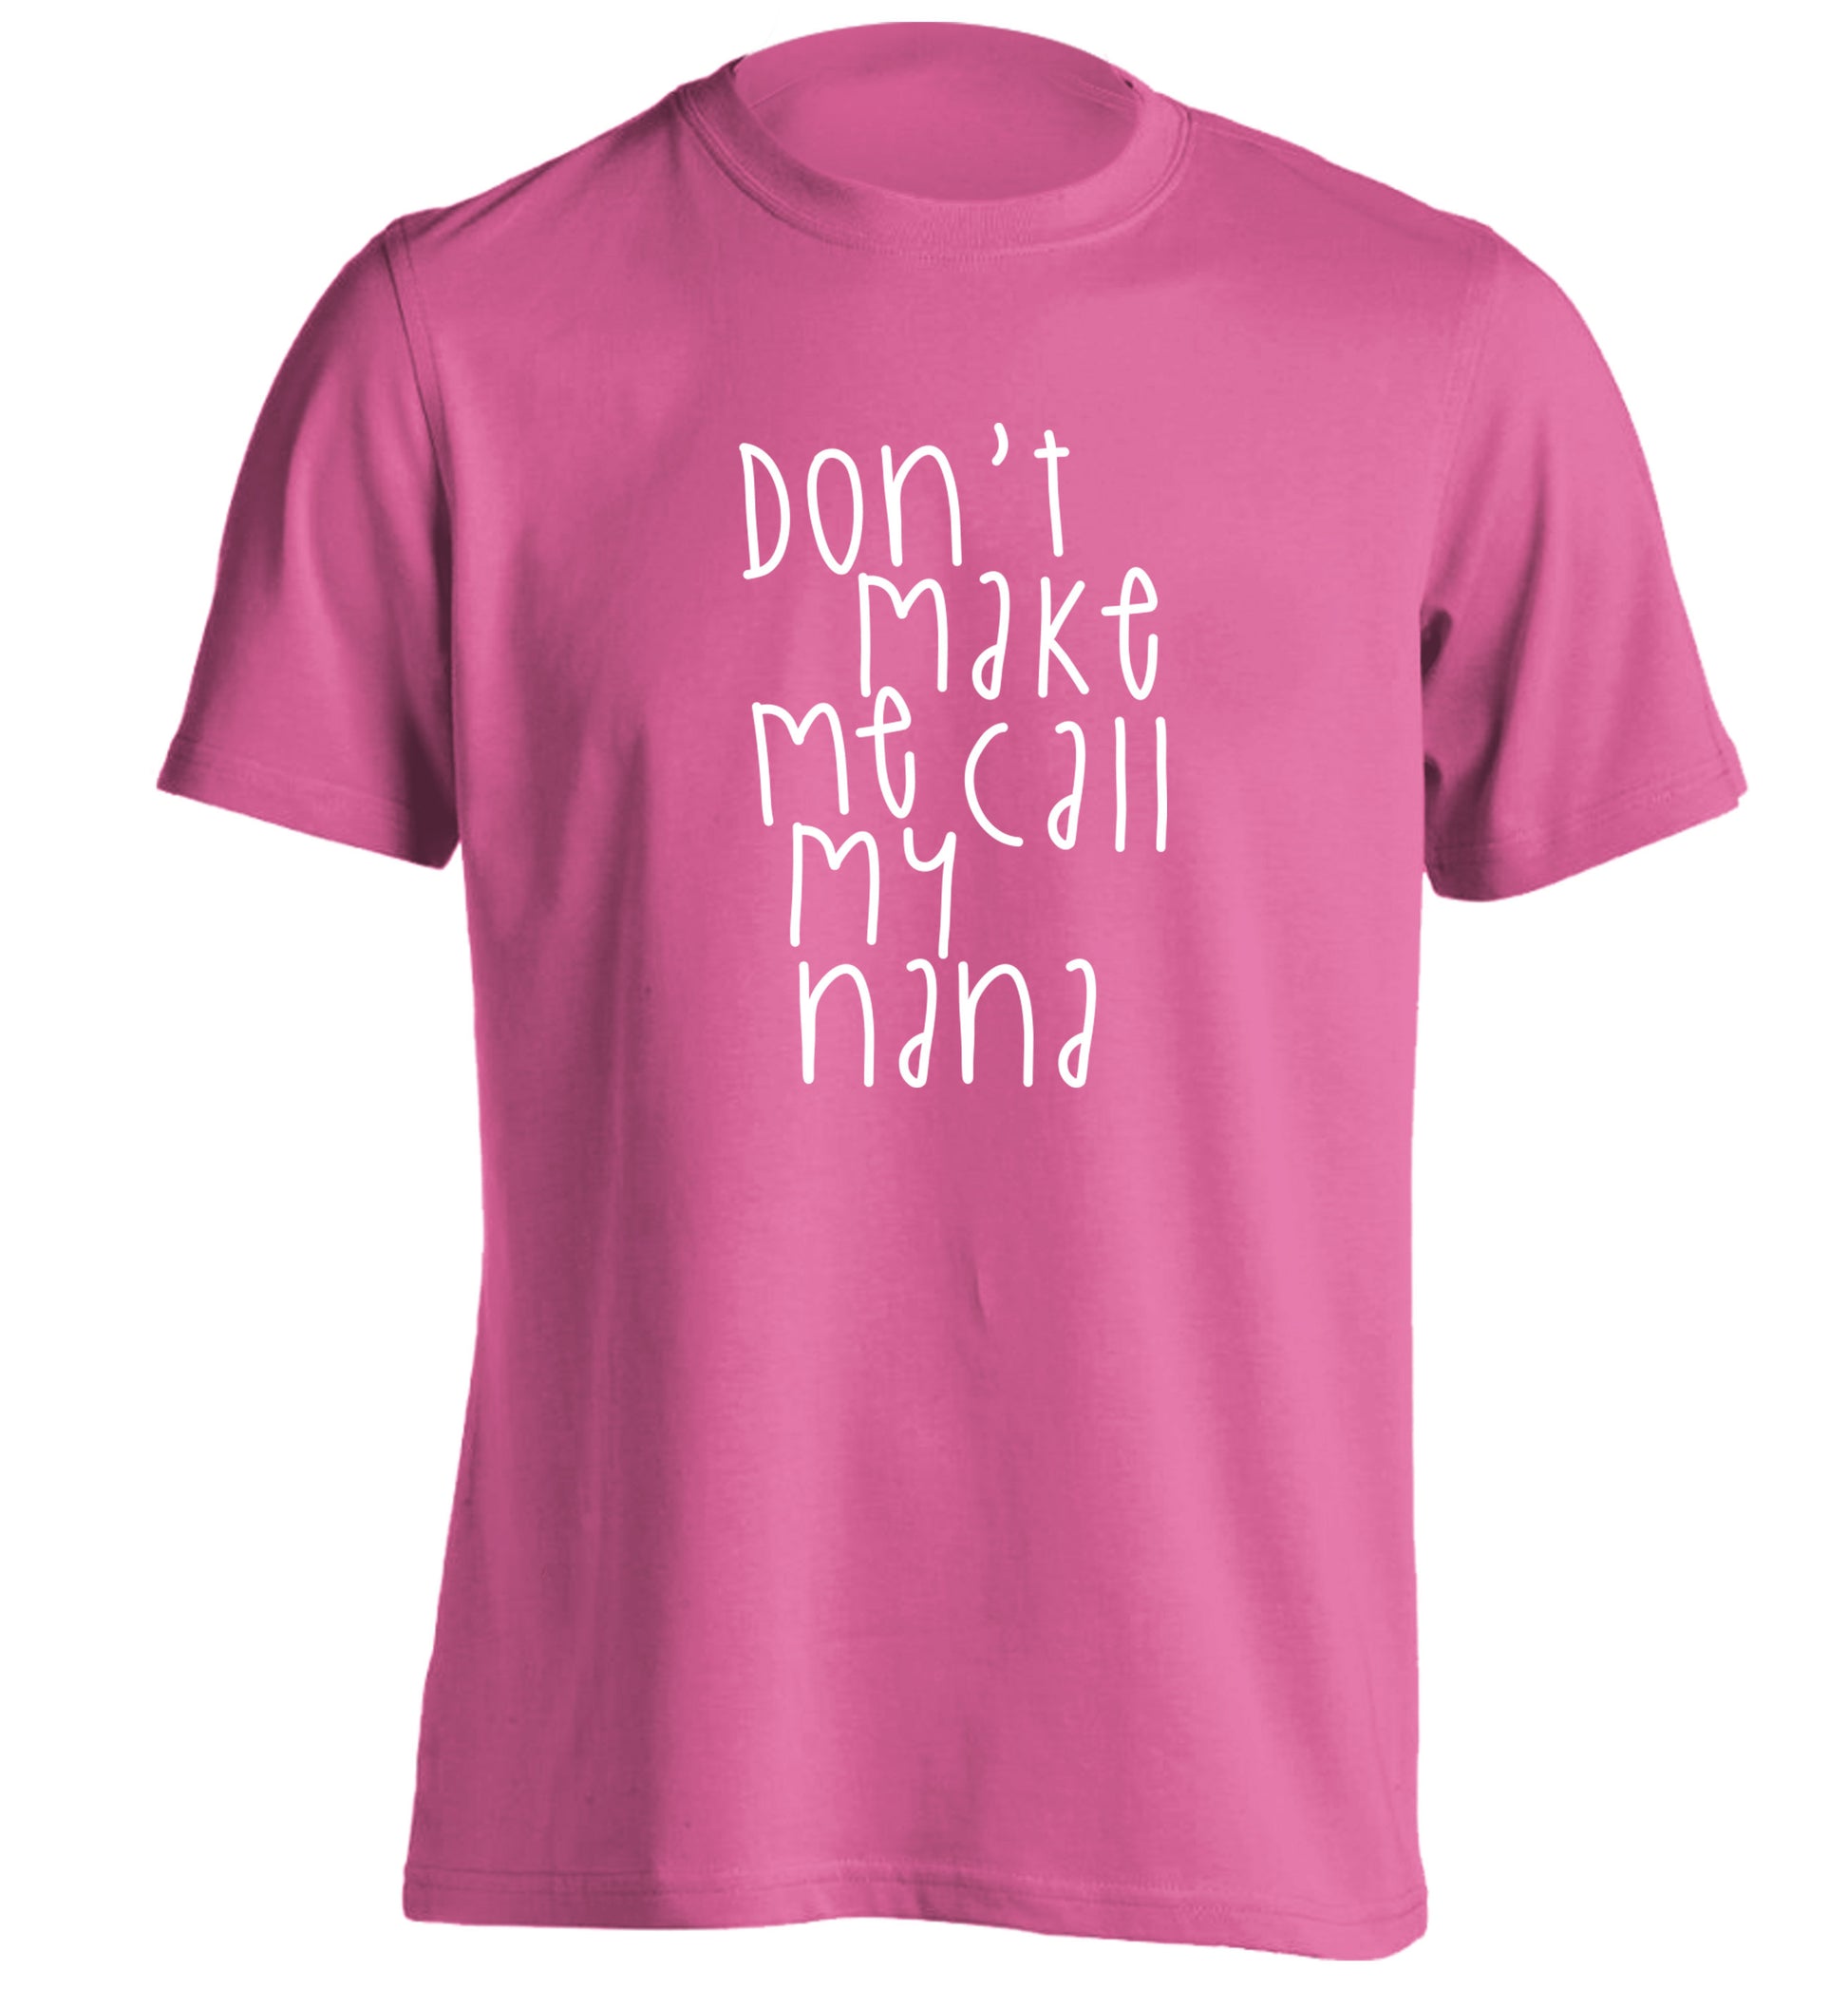 Don't make me call my nana adults unisex pink Tshirt 2XL